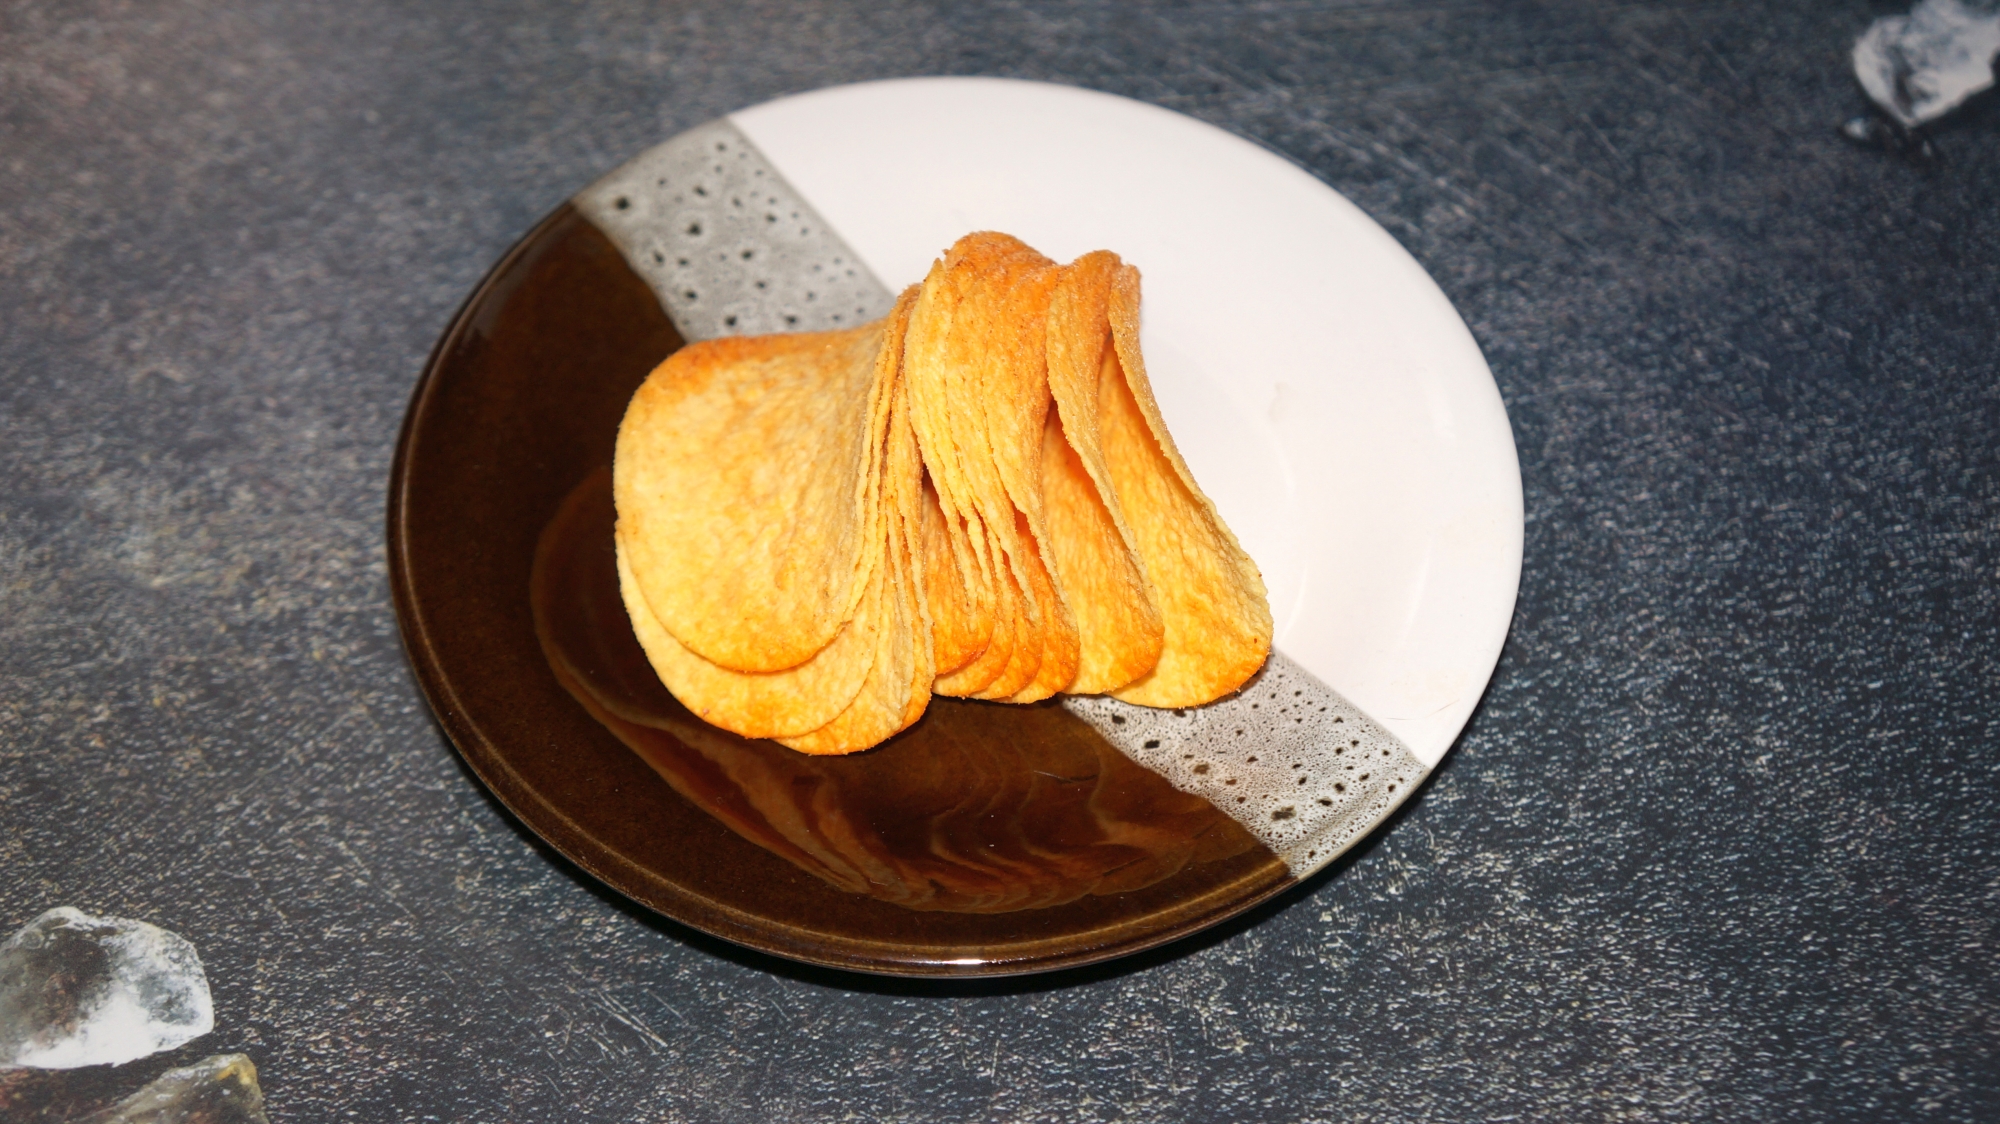 Чипсы Pringles Paprika